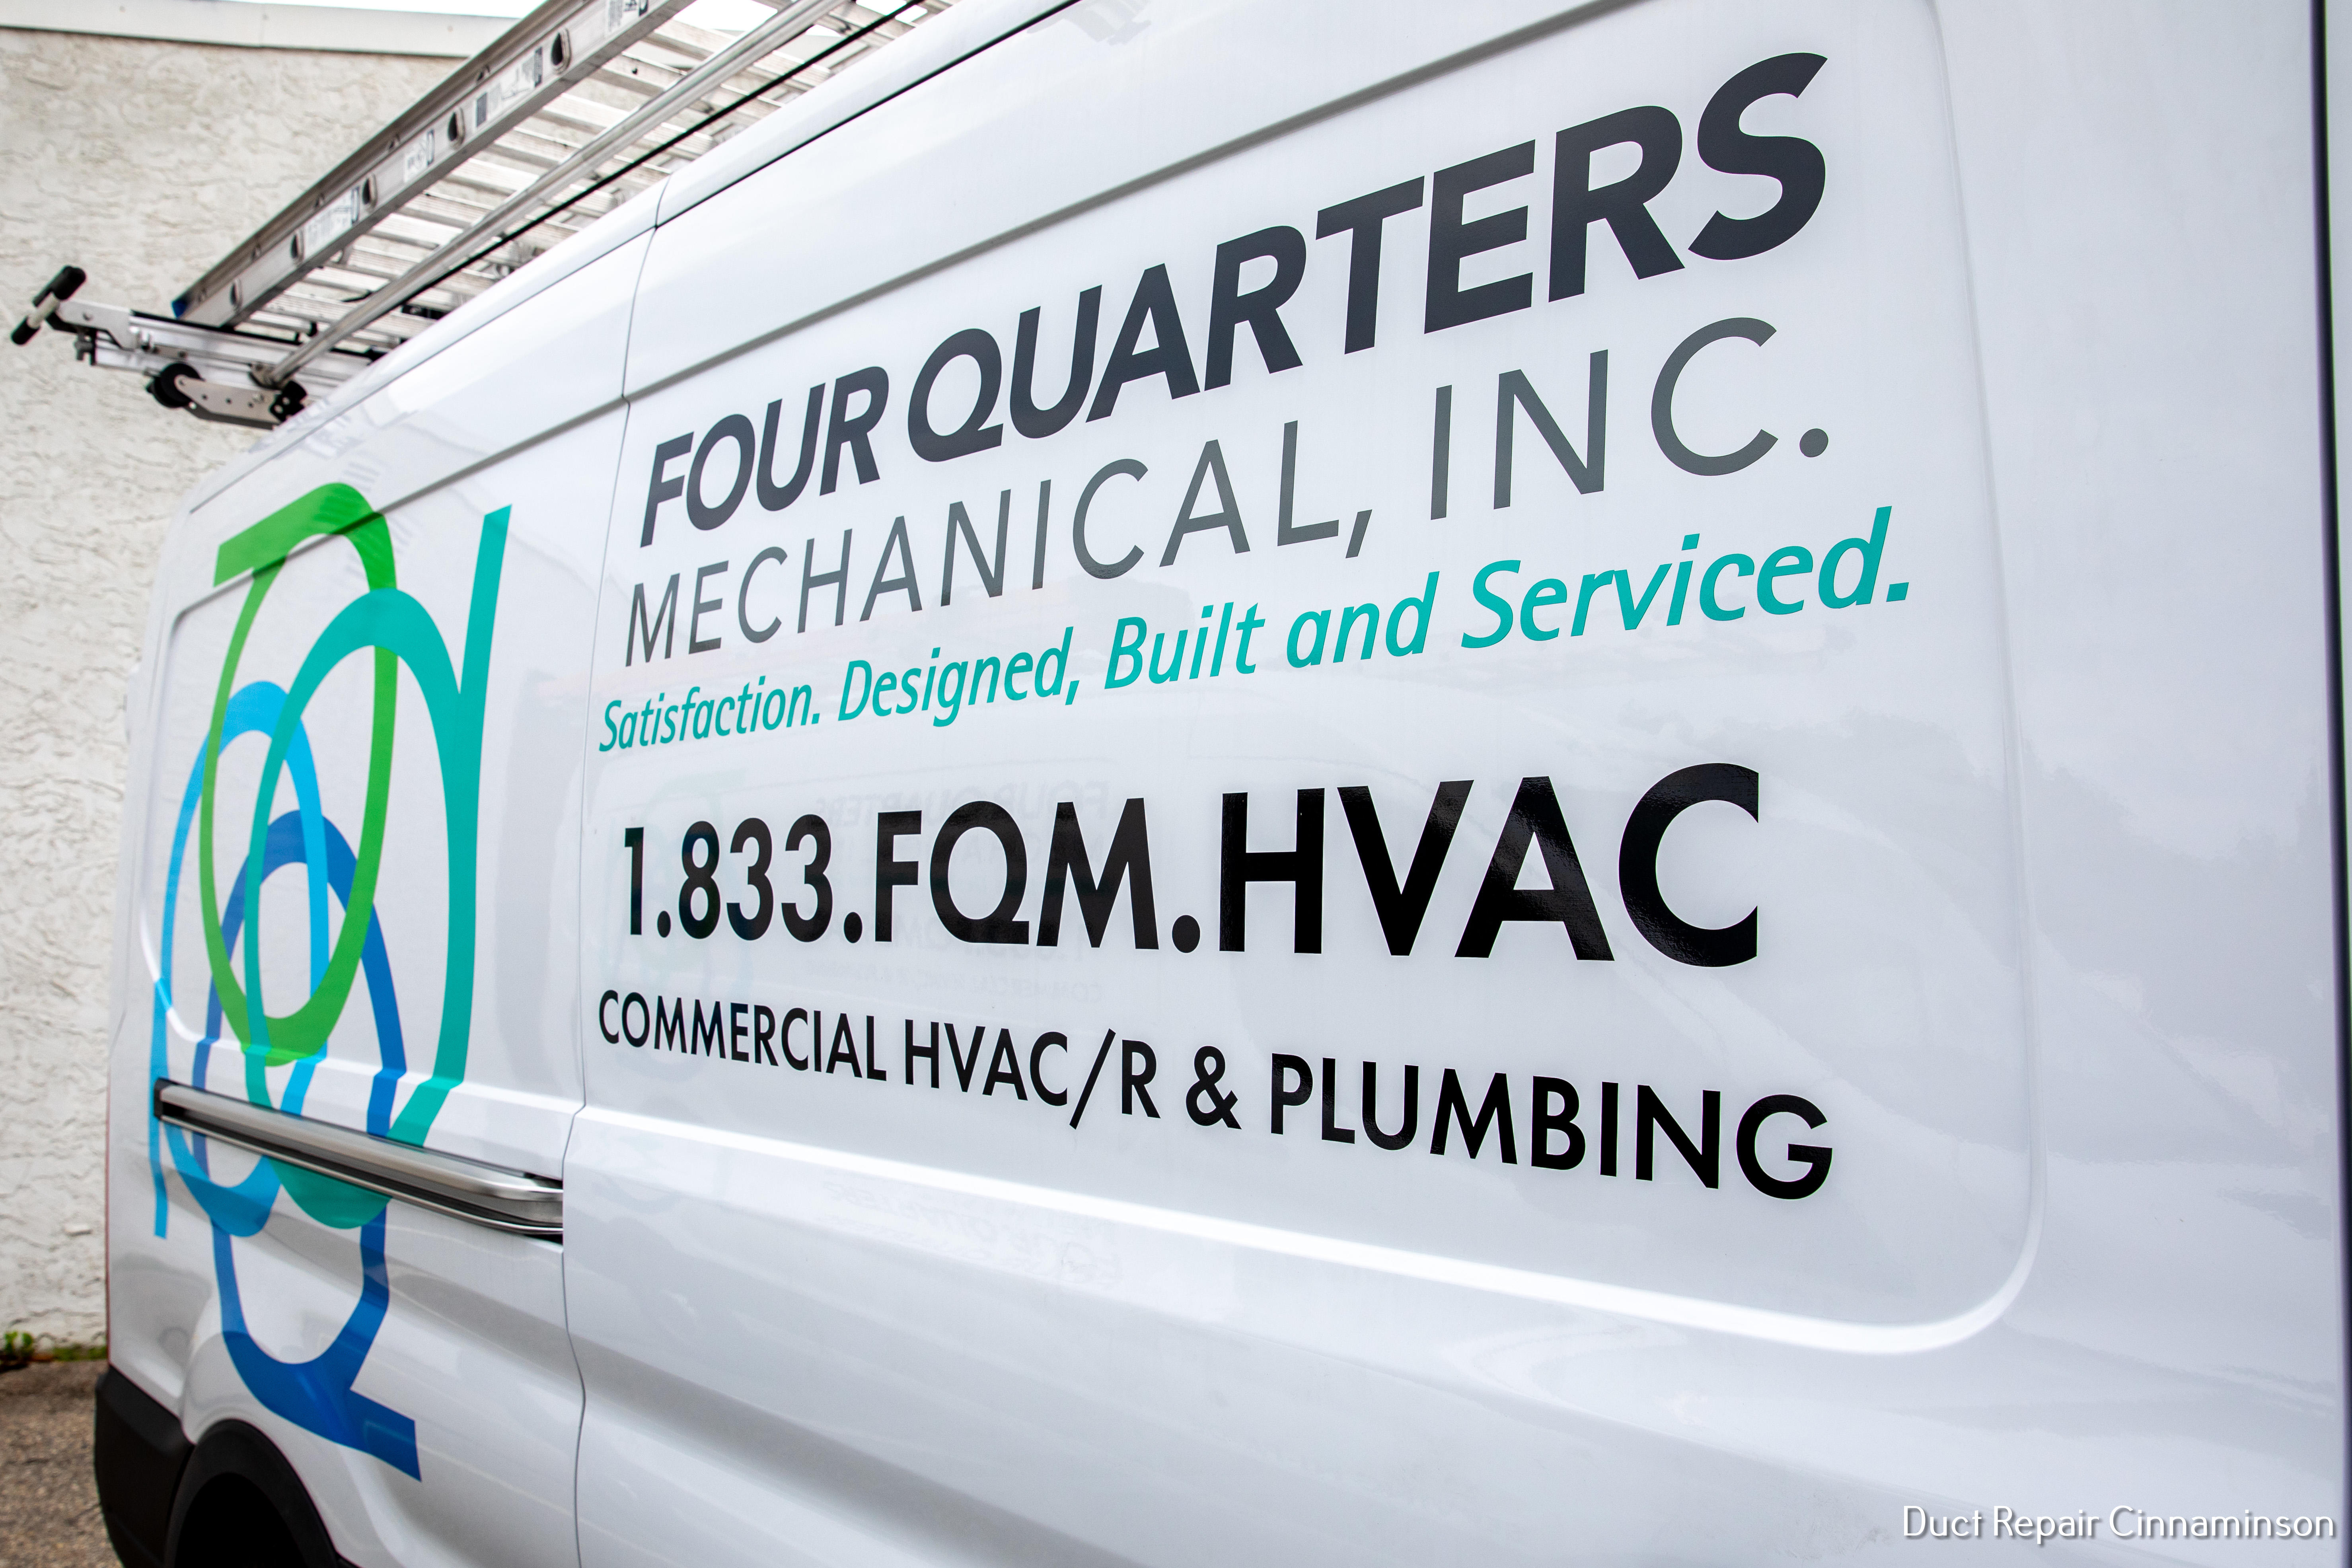 Four Quarters Mechanical, Inc Explains Why Working with Professional HVAC Contractors Is an Excellent Idea 